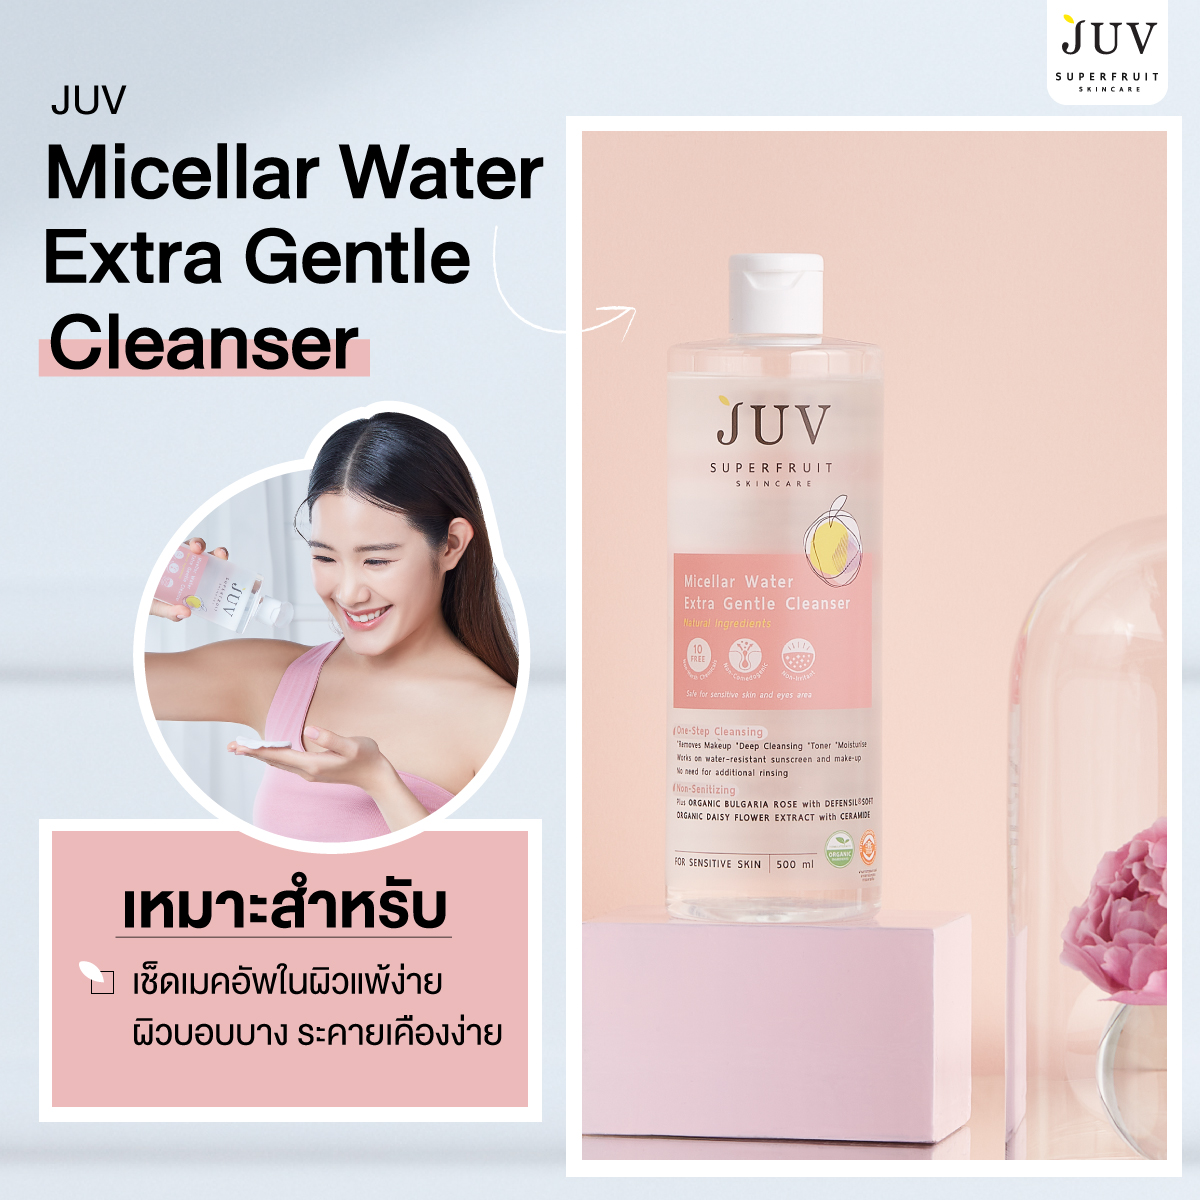 JUV Micellar Water Extra Gentle Cleanse ไมเซลล่าบำรุงผิวอ่อนโยน สูตรสีชมพู